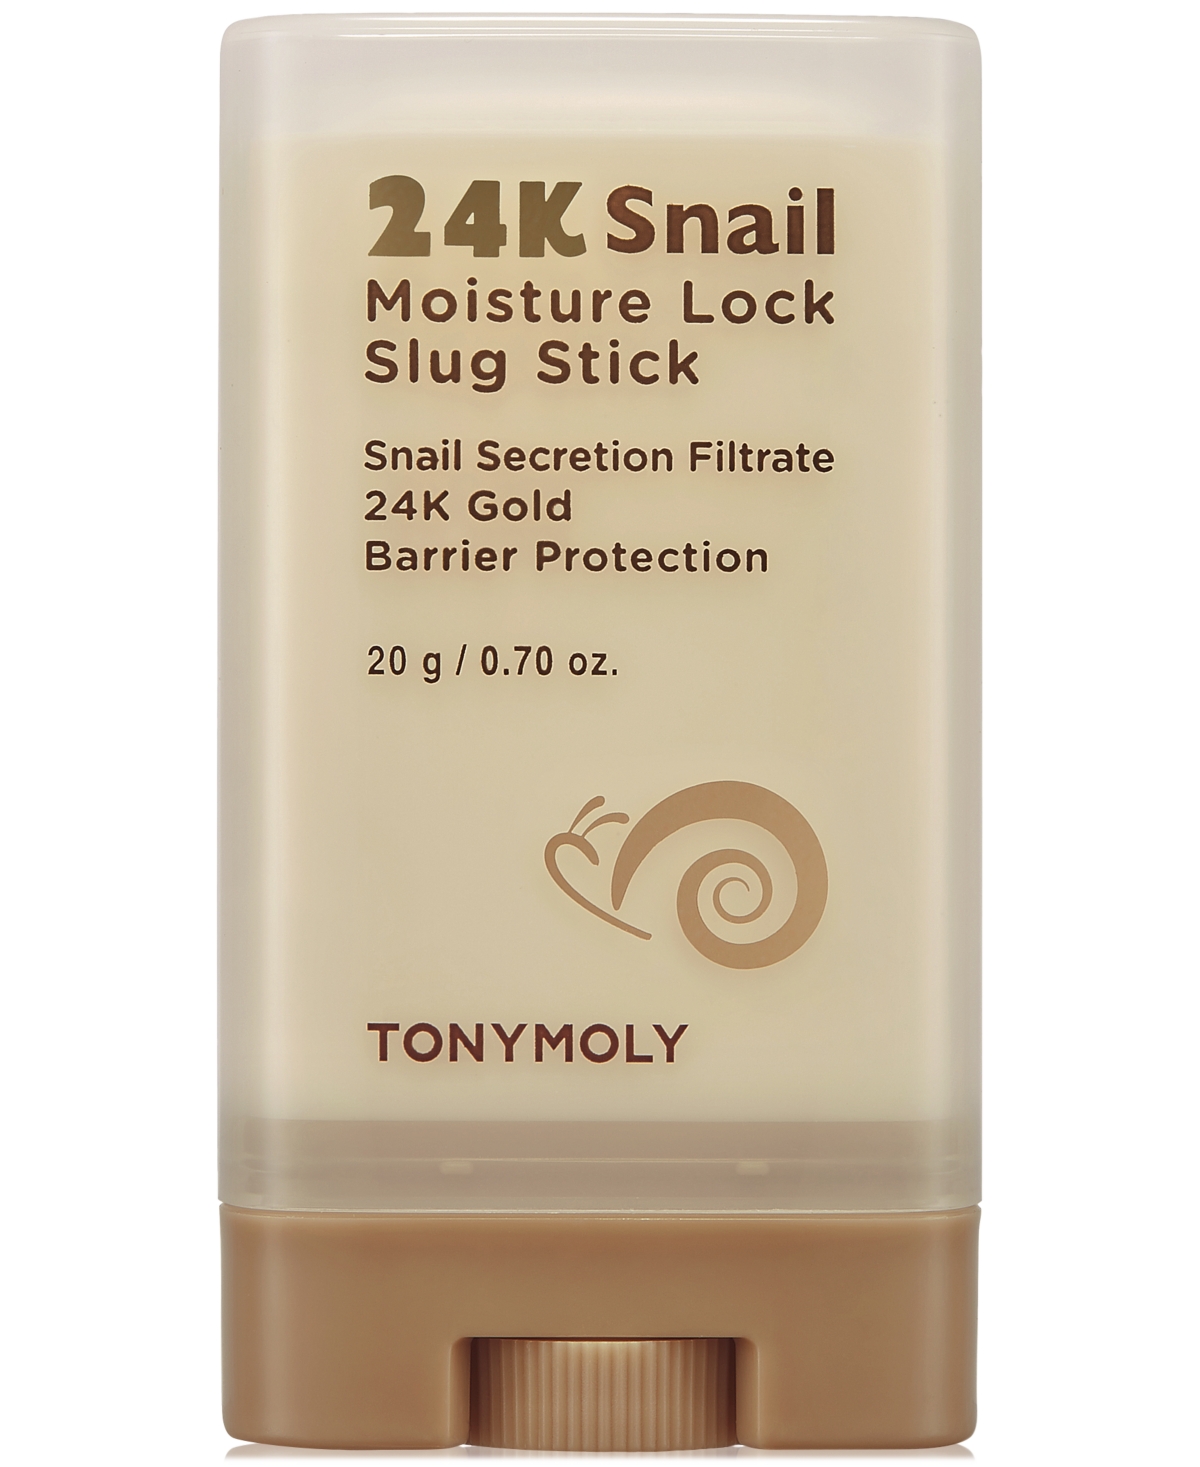 Tonymoly 24k Snail Moisture Lock Slug Stick In No Color